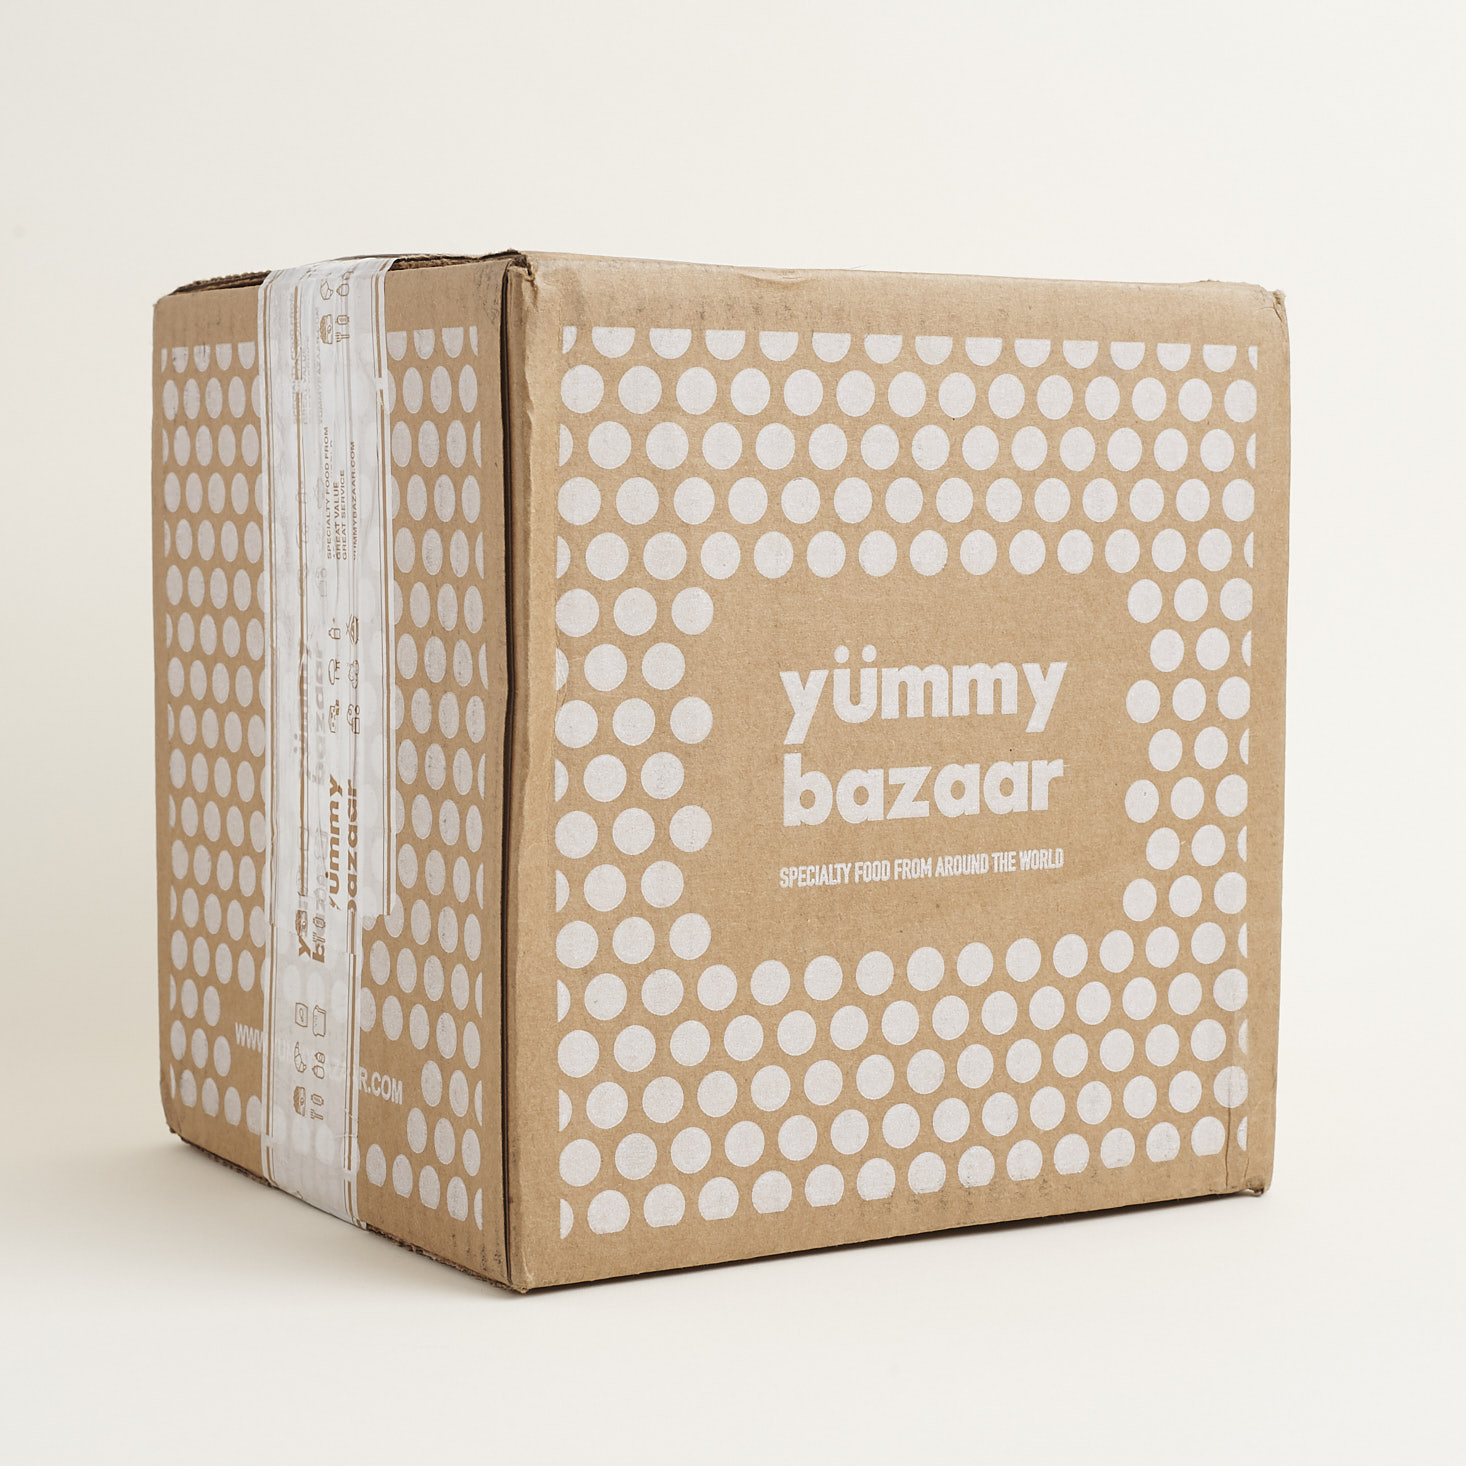 Yummy Bazaar Full Experience Gourmet Box Review – February 2018